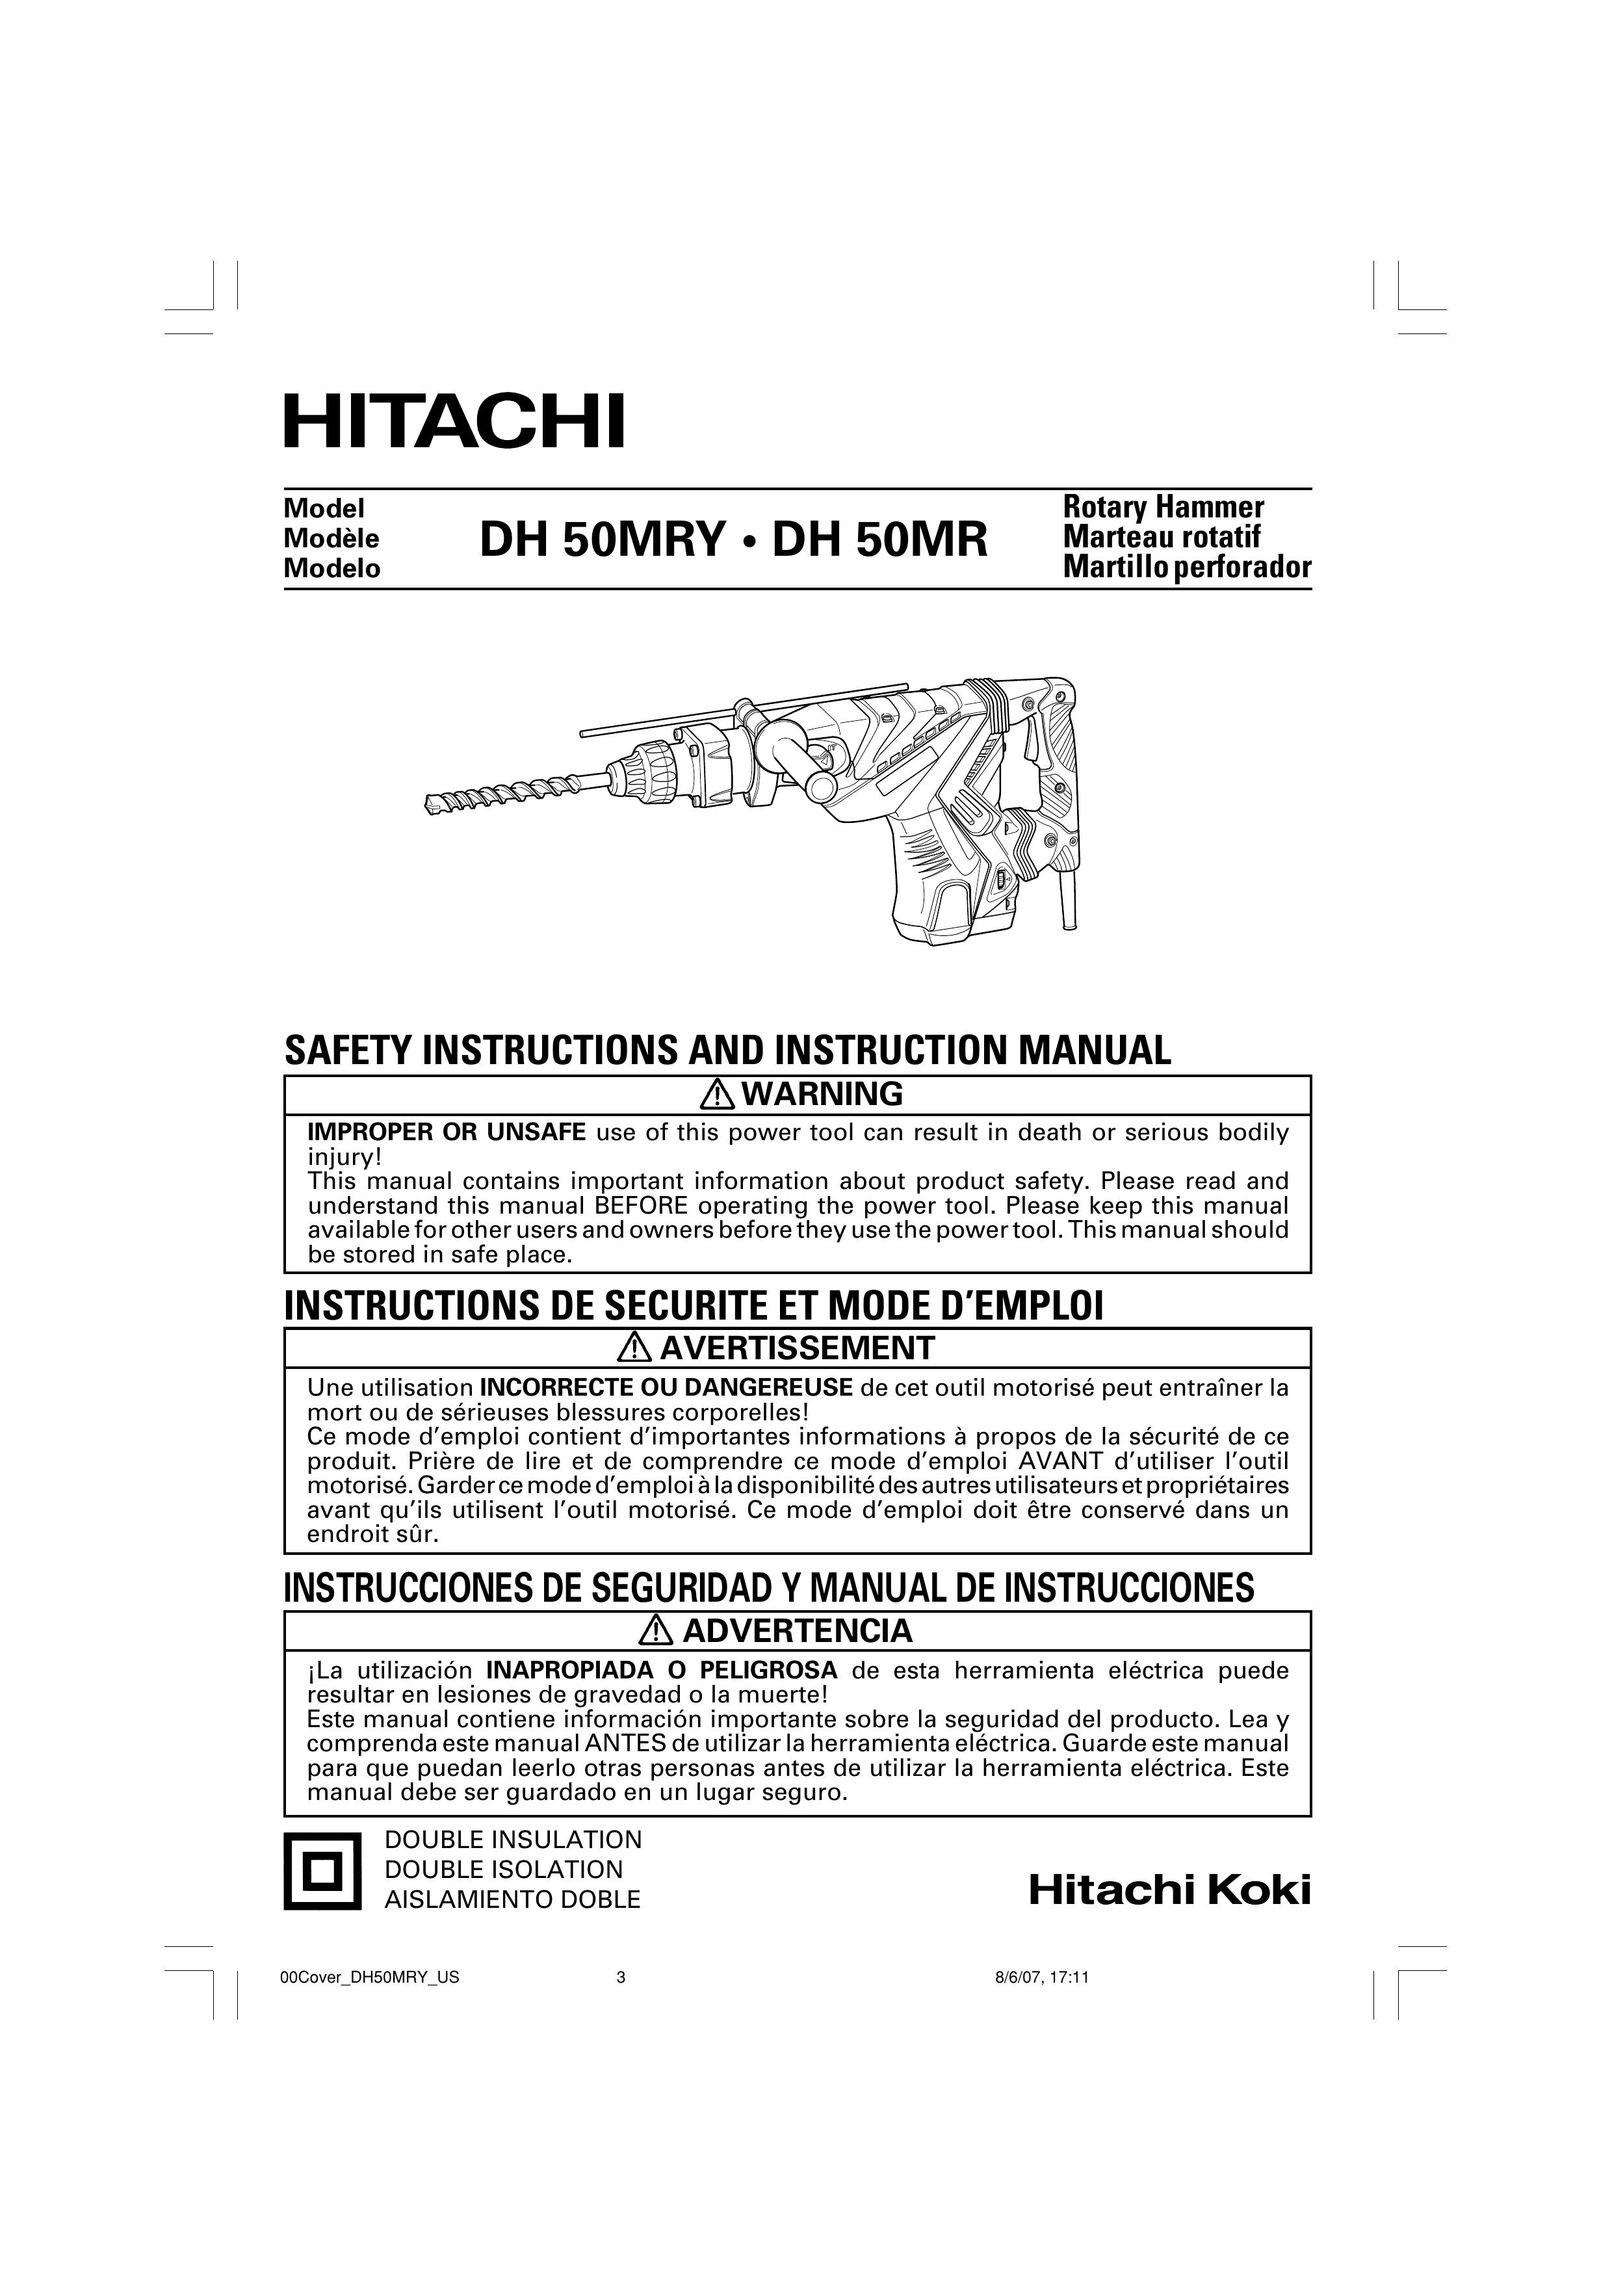 Hitachi DH 50MRY Power Hammer User Manual